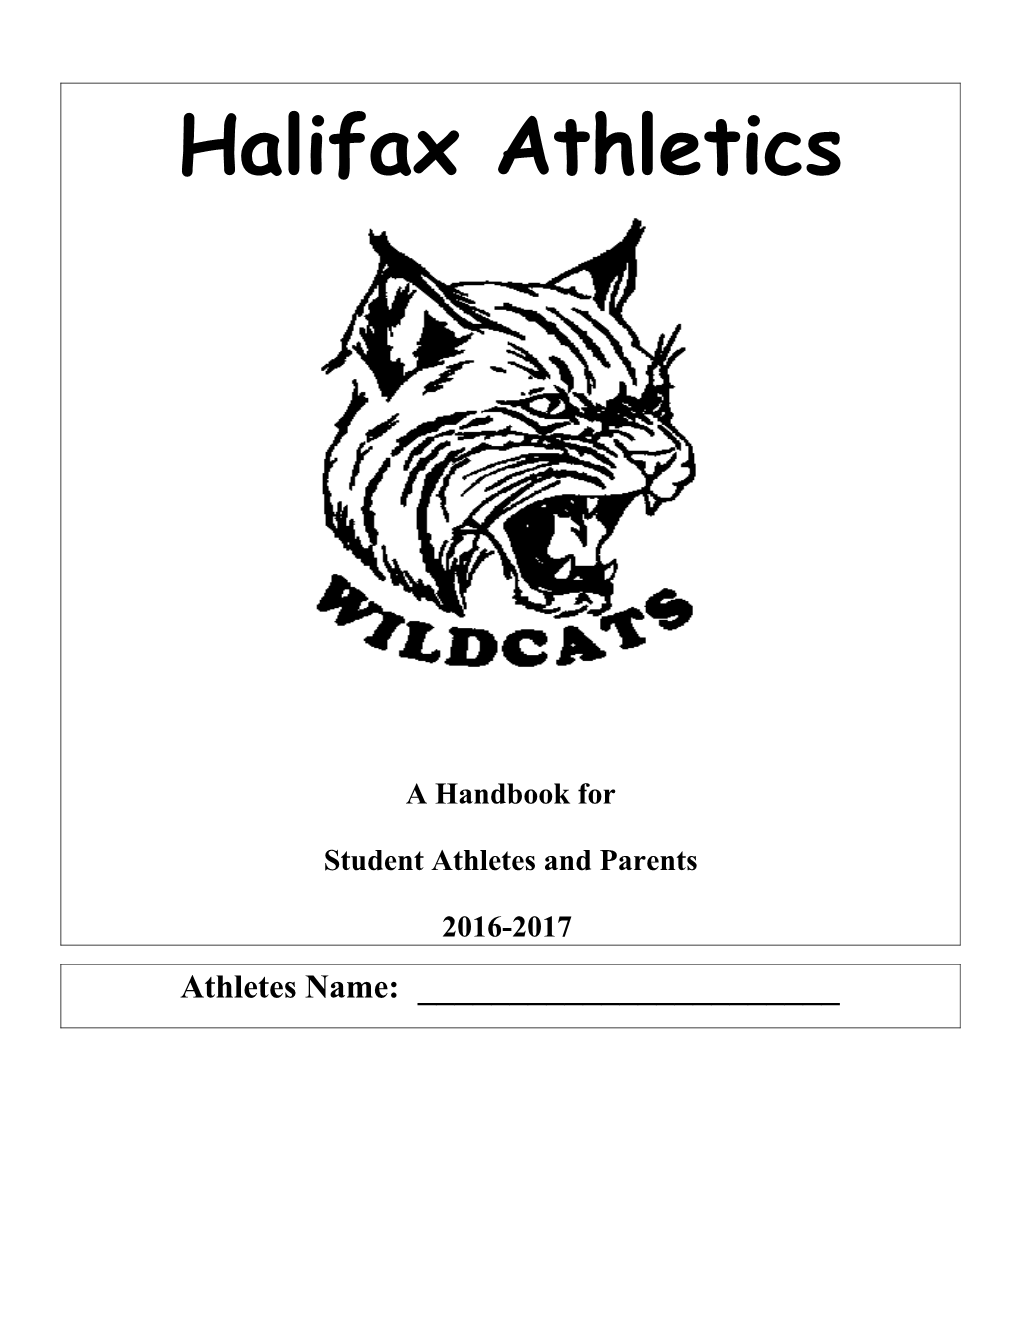 HASD Handbooks for Student Athletes